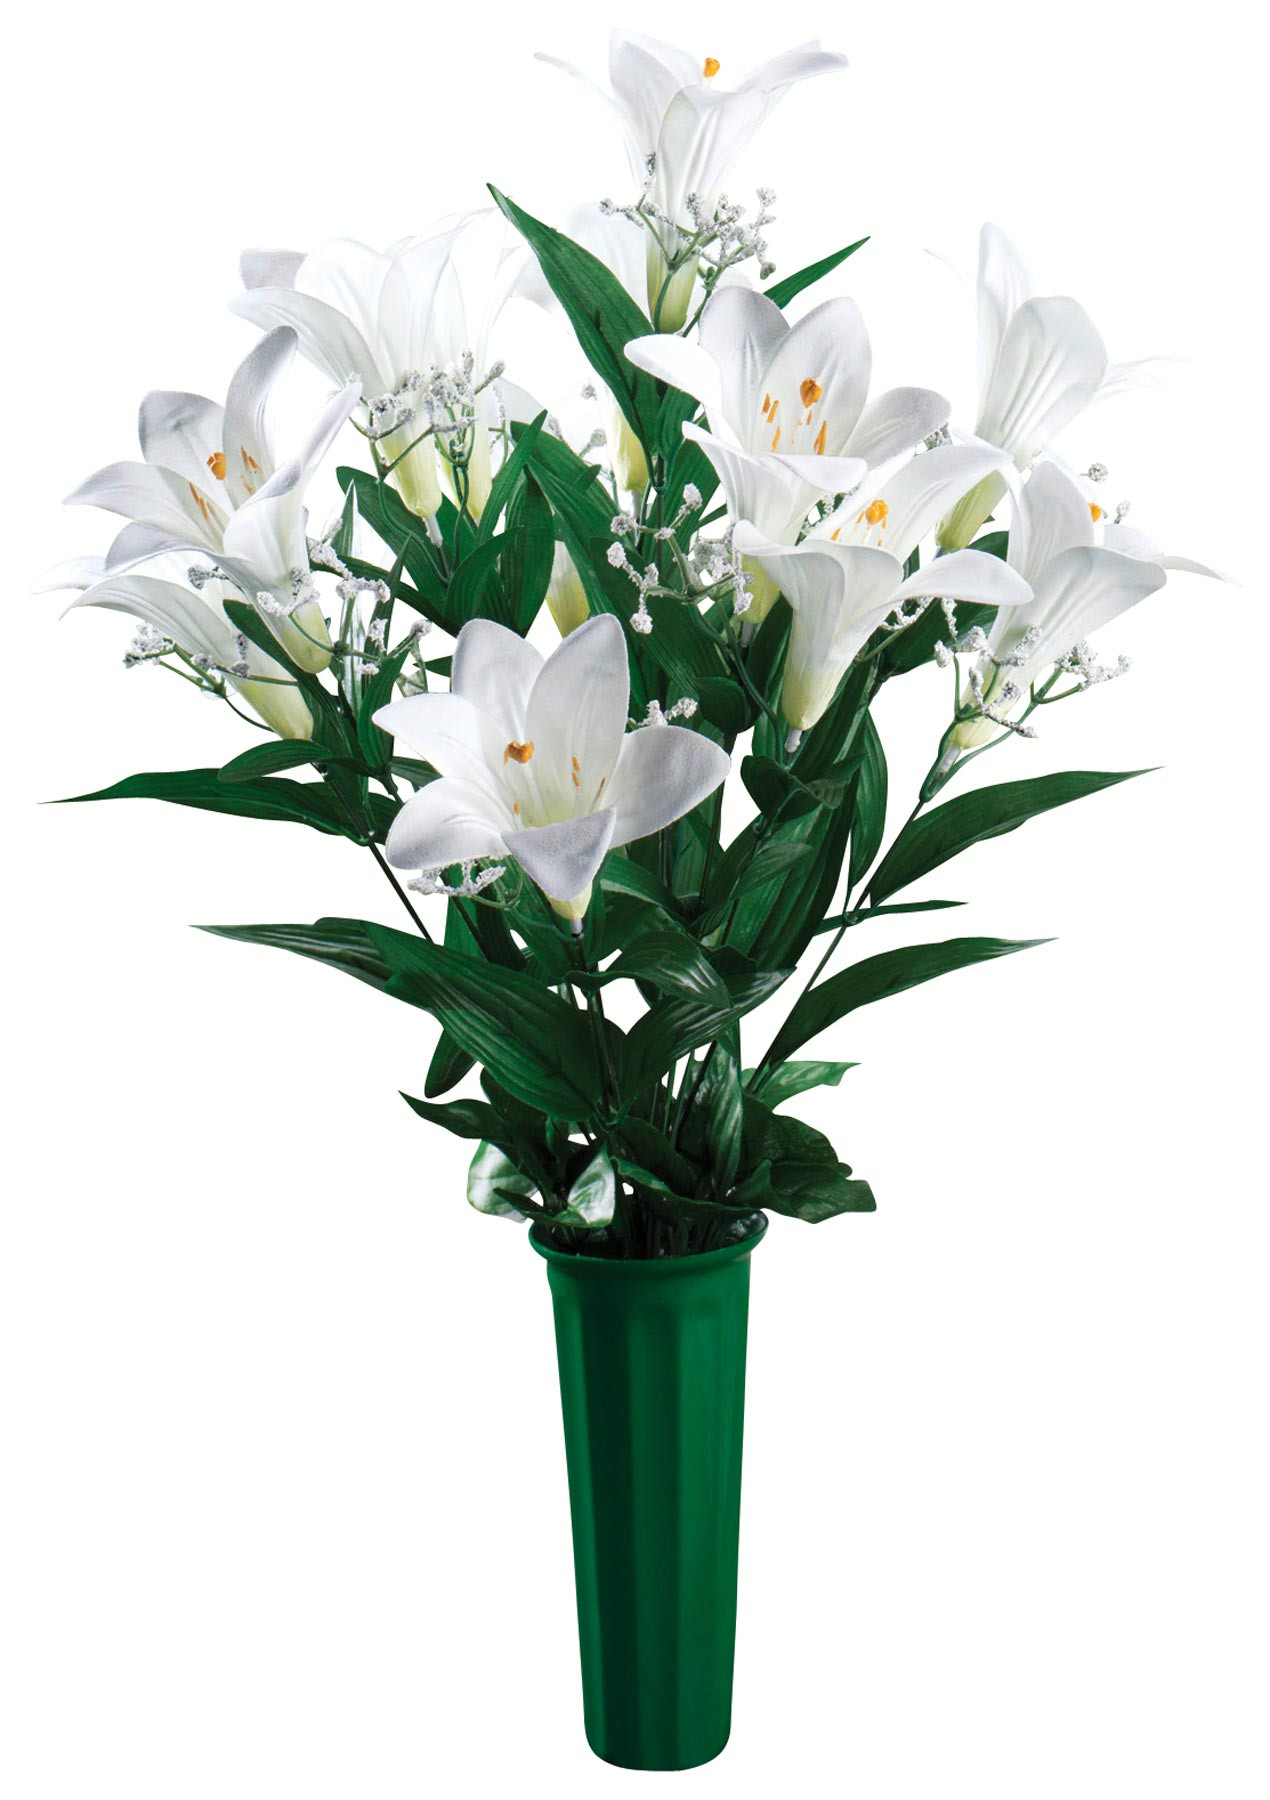 water lily vase of easter lily memorial bouquet by oakridgetm walmart com pertaining to e1f201f0 36fd 47cb b2bf 33847261ea1b 1 b26f21a3e36b147874cdf5675102f840